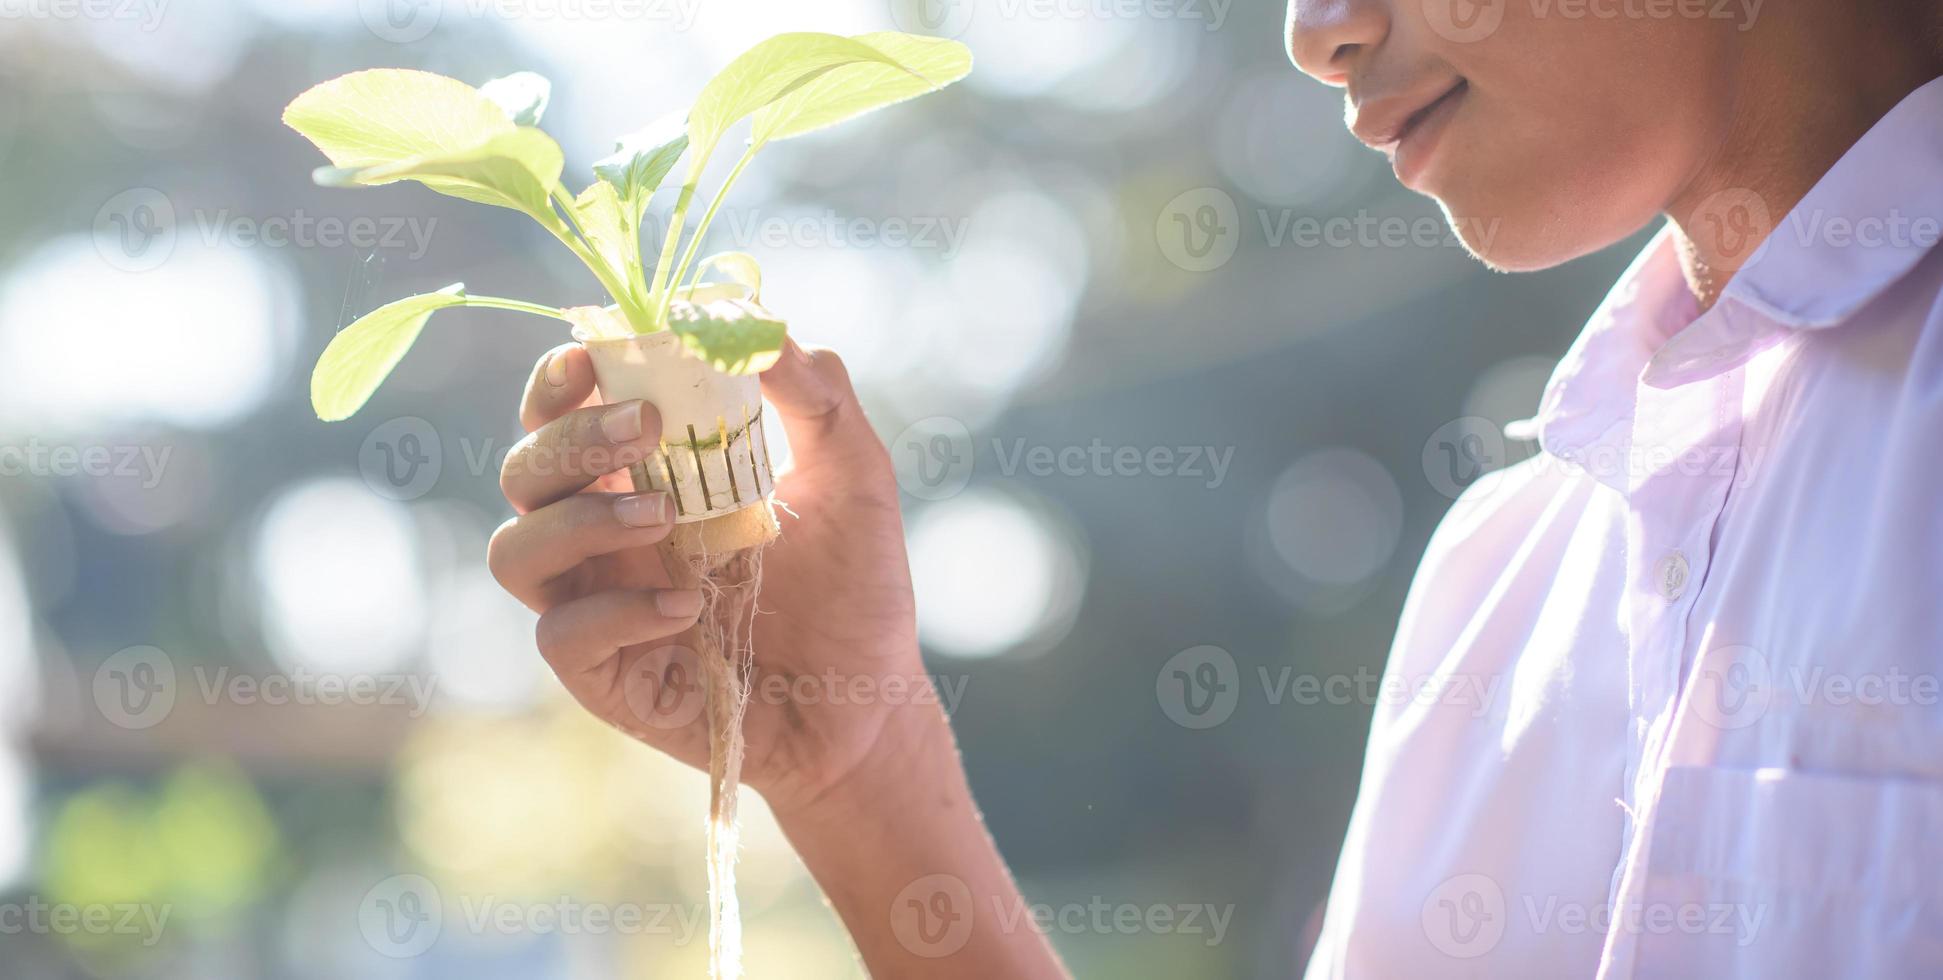 hidroponia, legumes orgânicos frescos colhidos, mãos de agricultores segurando legumes frescos. foto